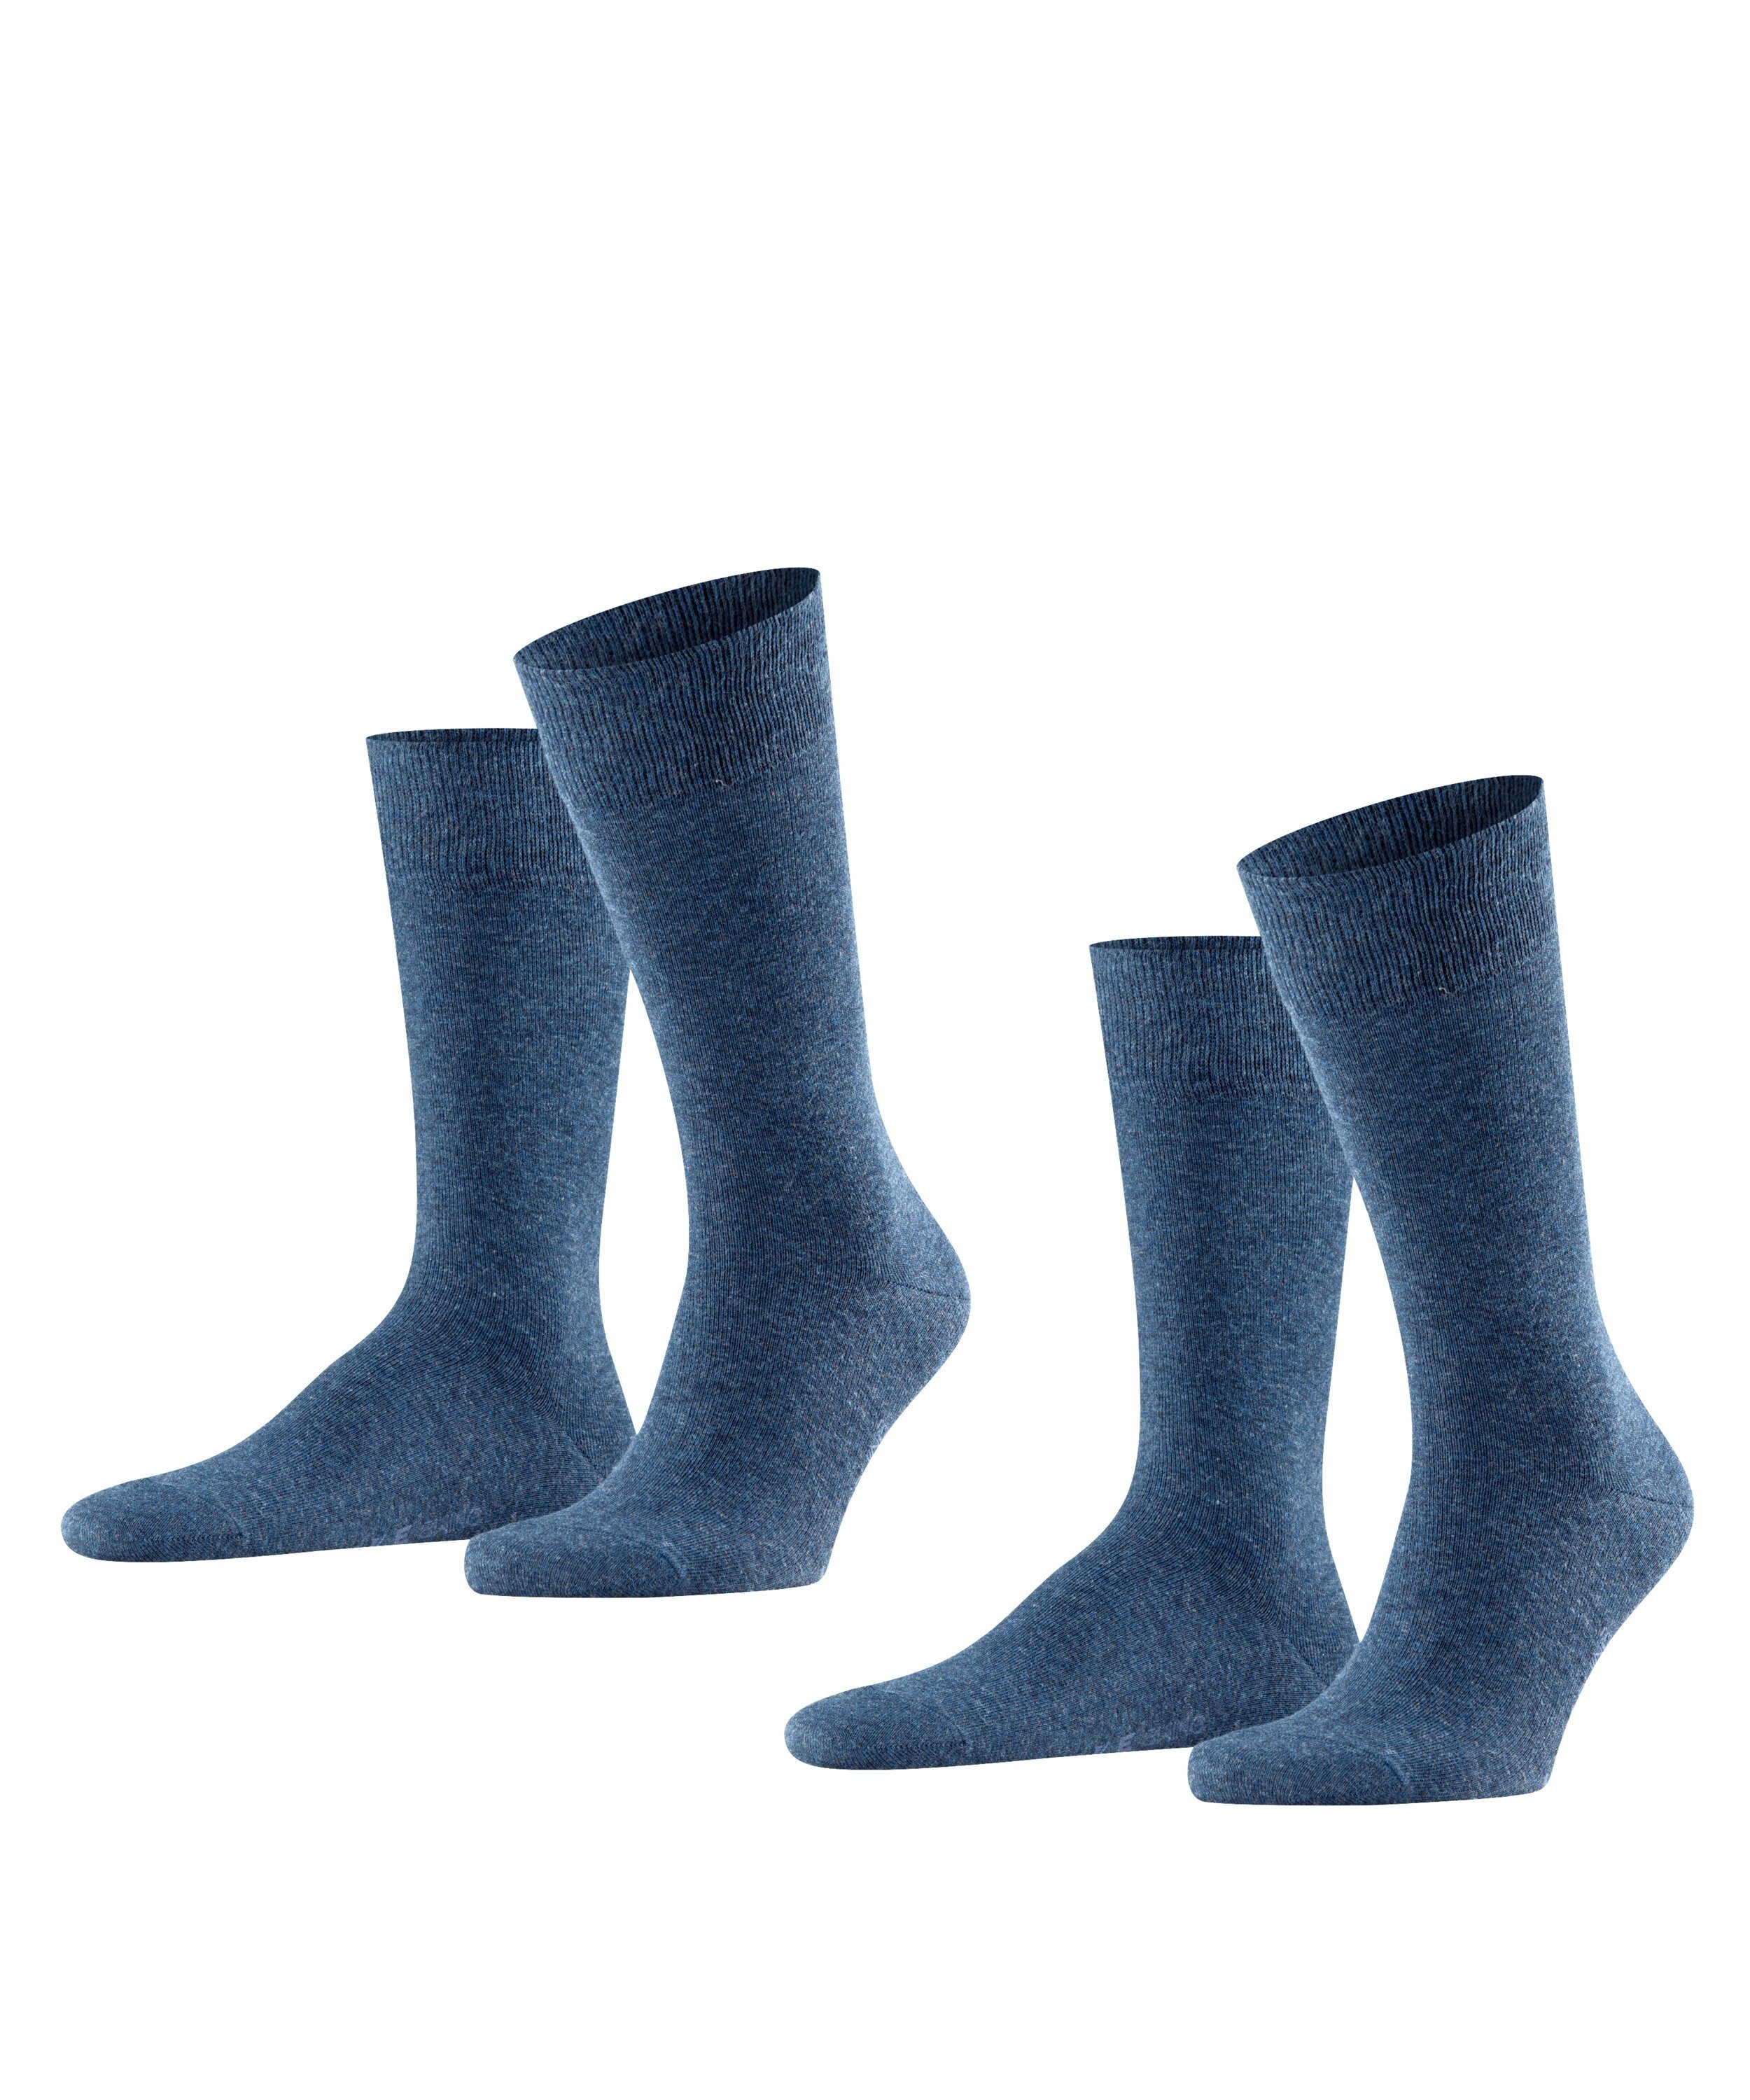 Wäsche/Bademode Socken FALKE Socken Swing 2-Pack (2-Paar) mit angenehmer Baumwolle